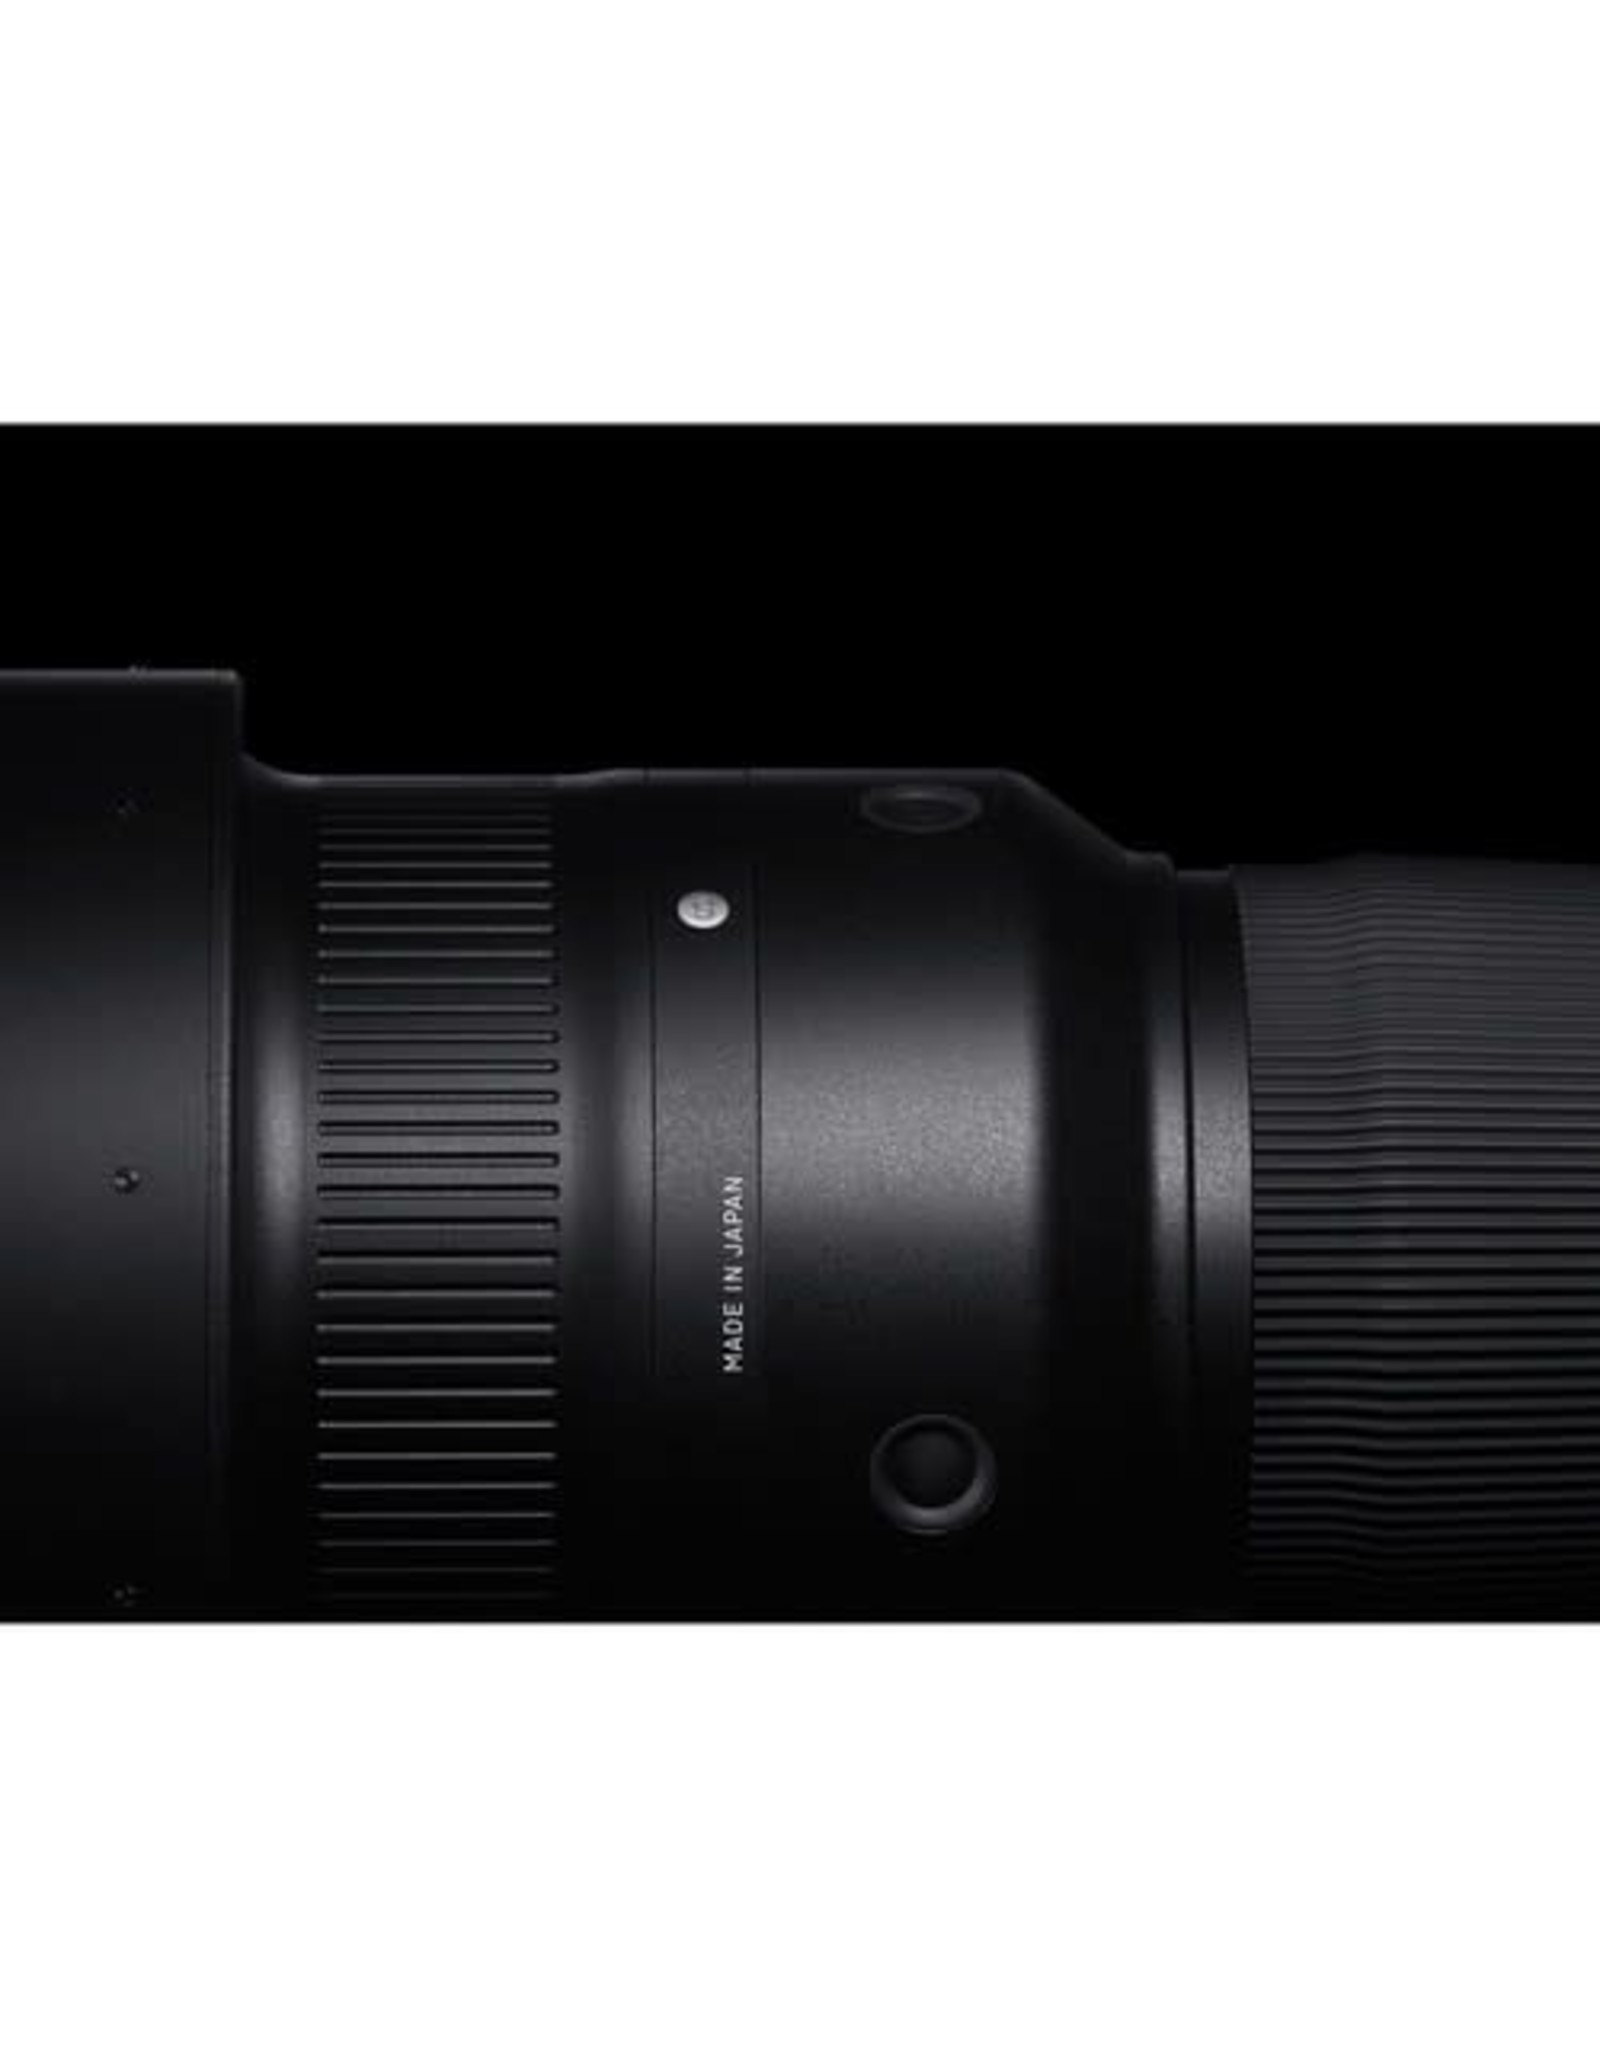 Sigma 500mm f4 Sports DG OS HSM - Camera Concepts & Telescope Solutions